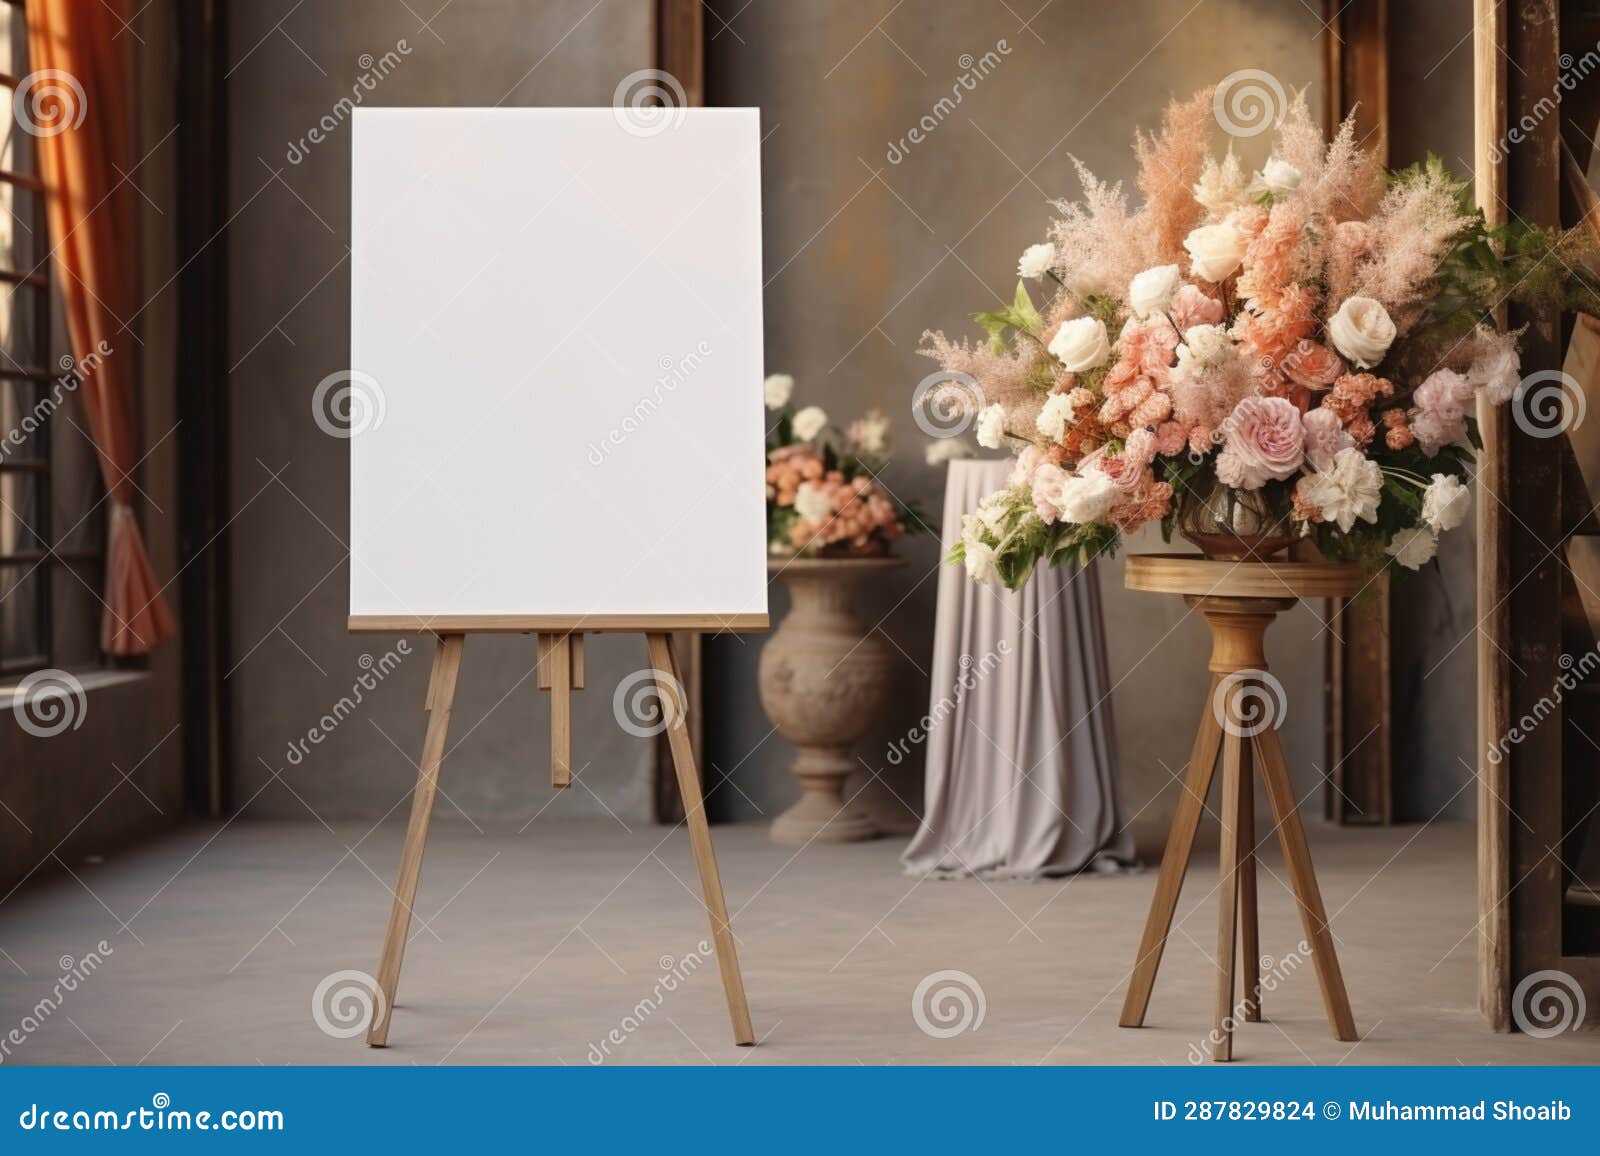 easel boasts blank photo board, poised to exhibit precious wedding snapshots